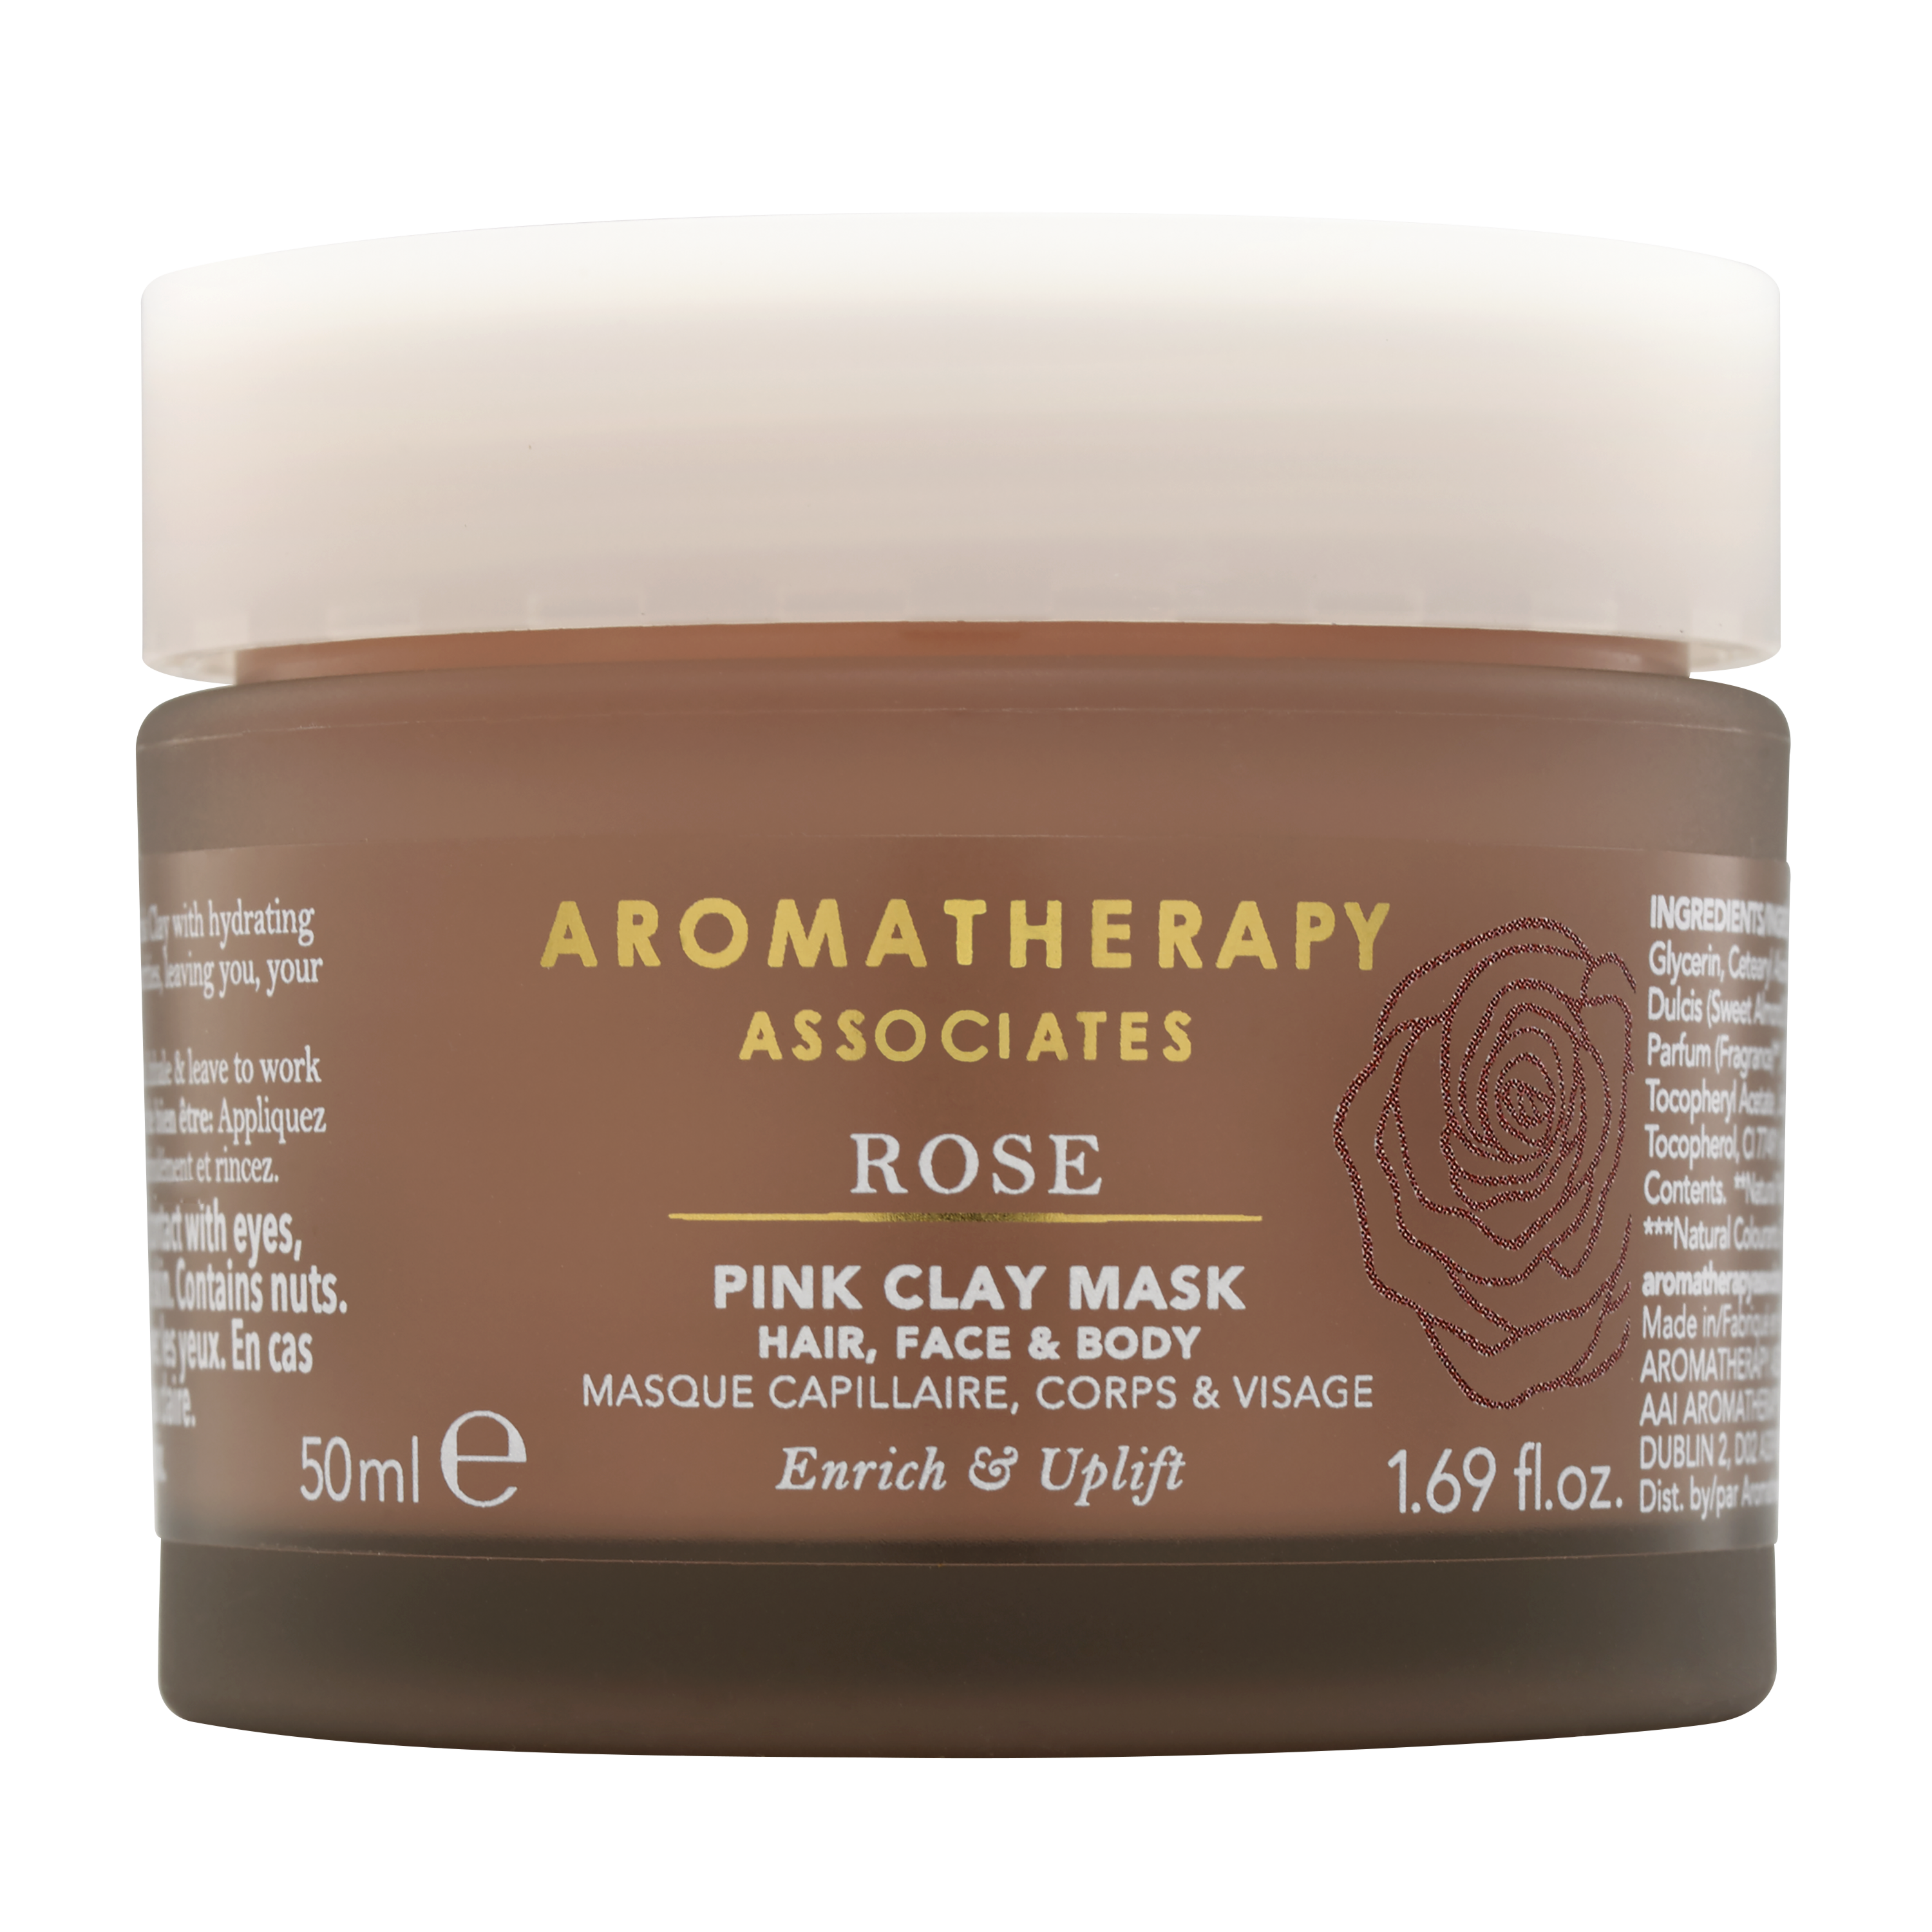 Rose Pink Clay Mask 50ml Aromatherapy Associates